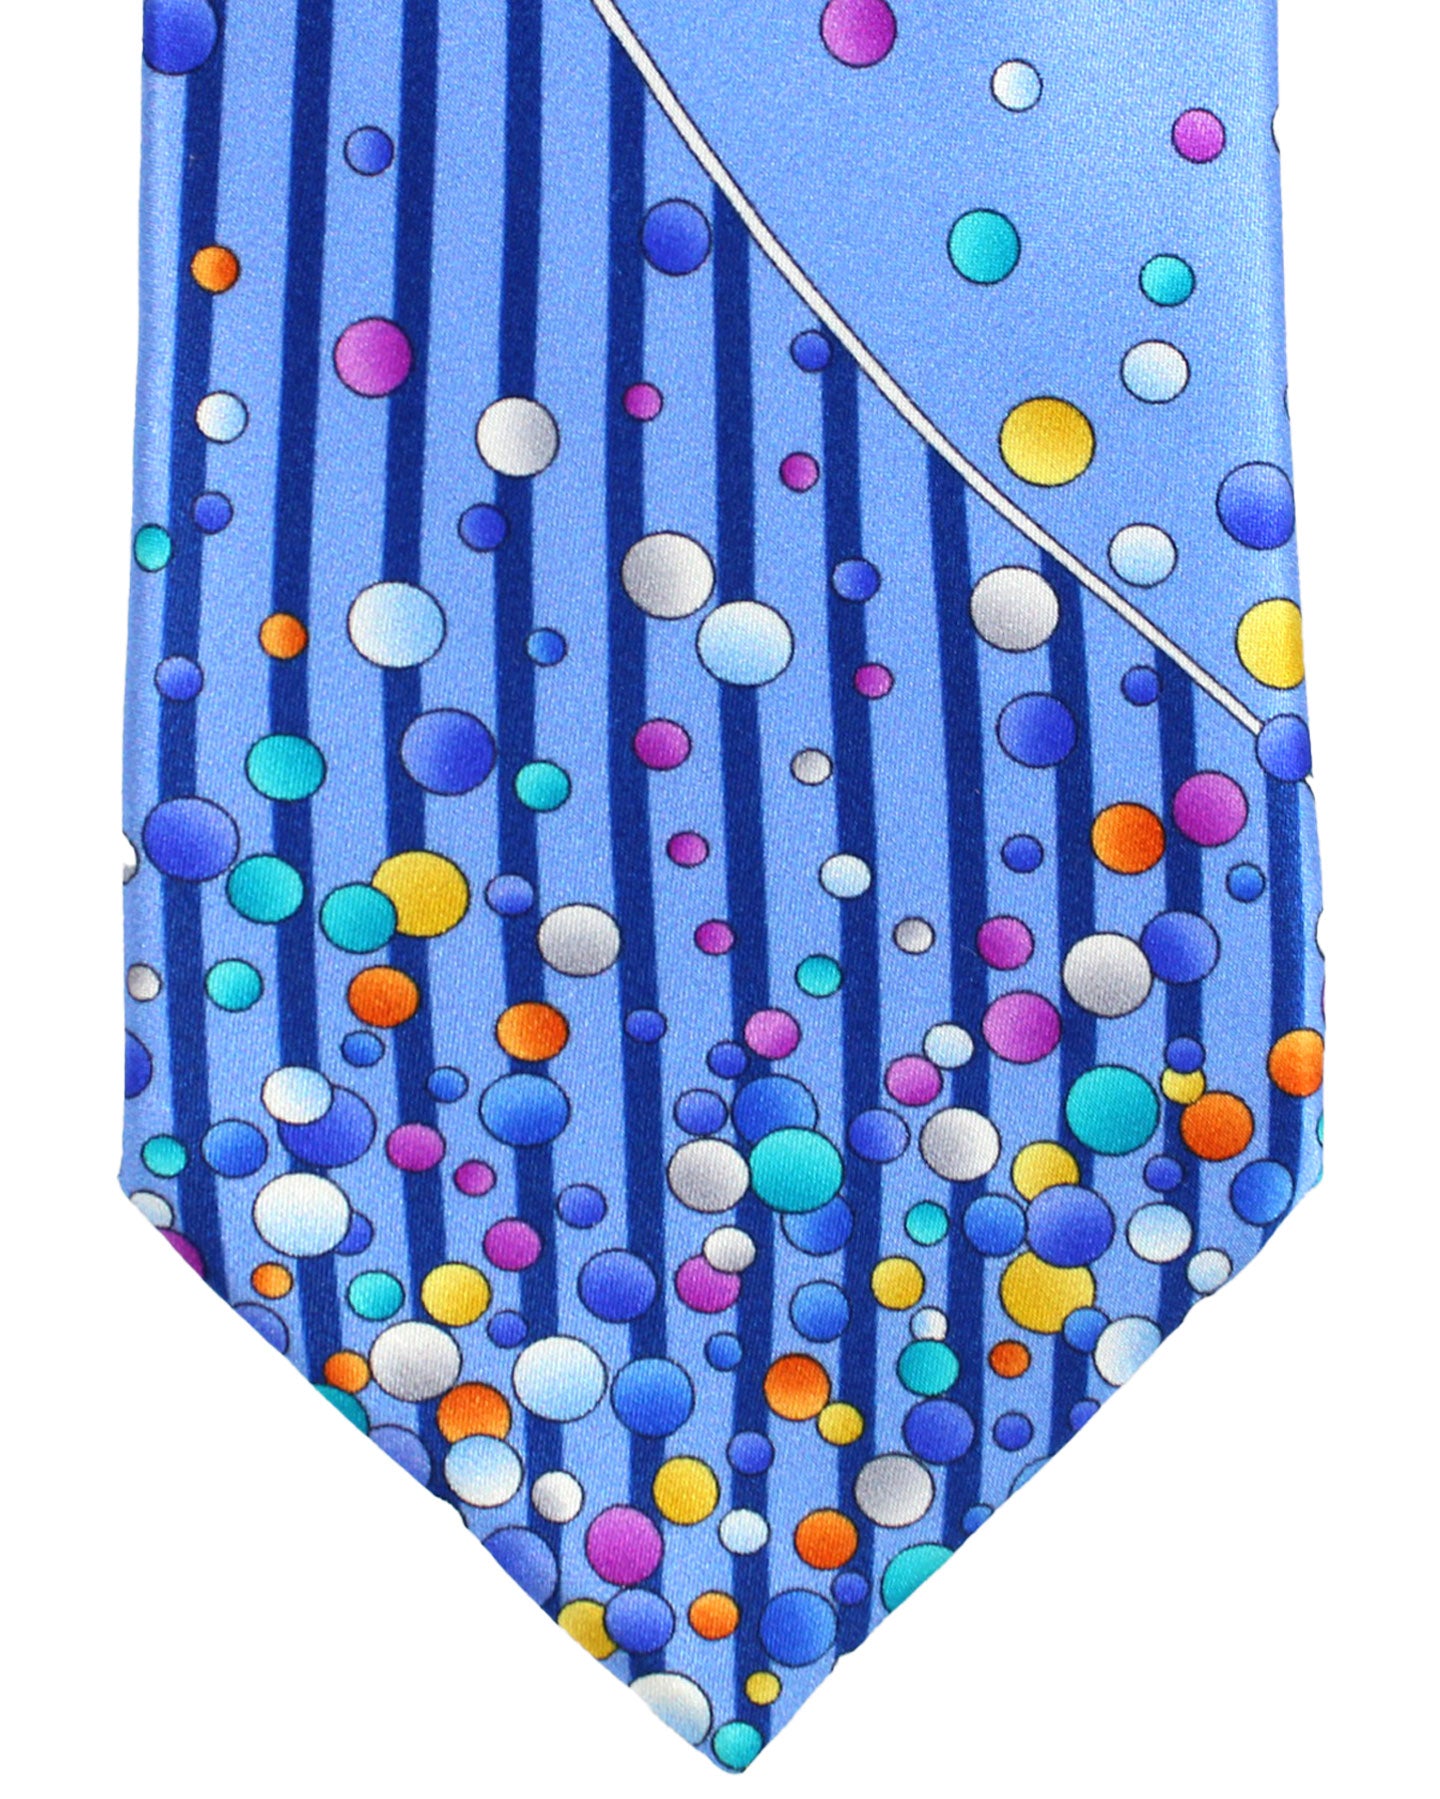 Vitaliano Pancaldi Silk Tie Blue Verical Stripes Dots Design